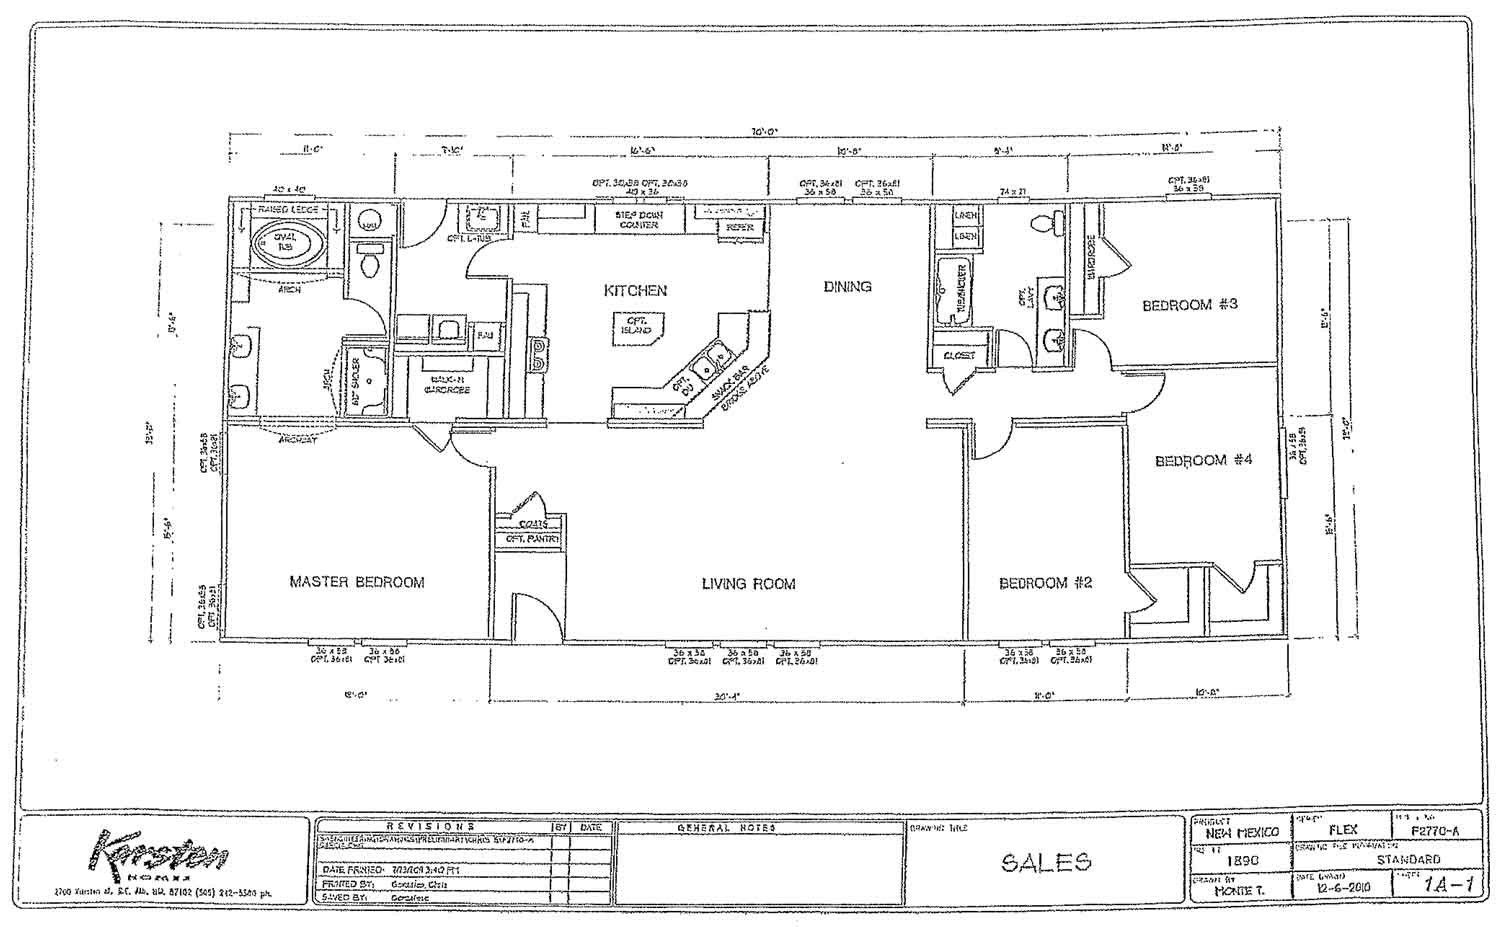 Homes Direct Modular Homes - Model K2770A - Floorplan